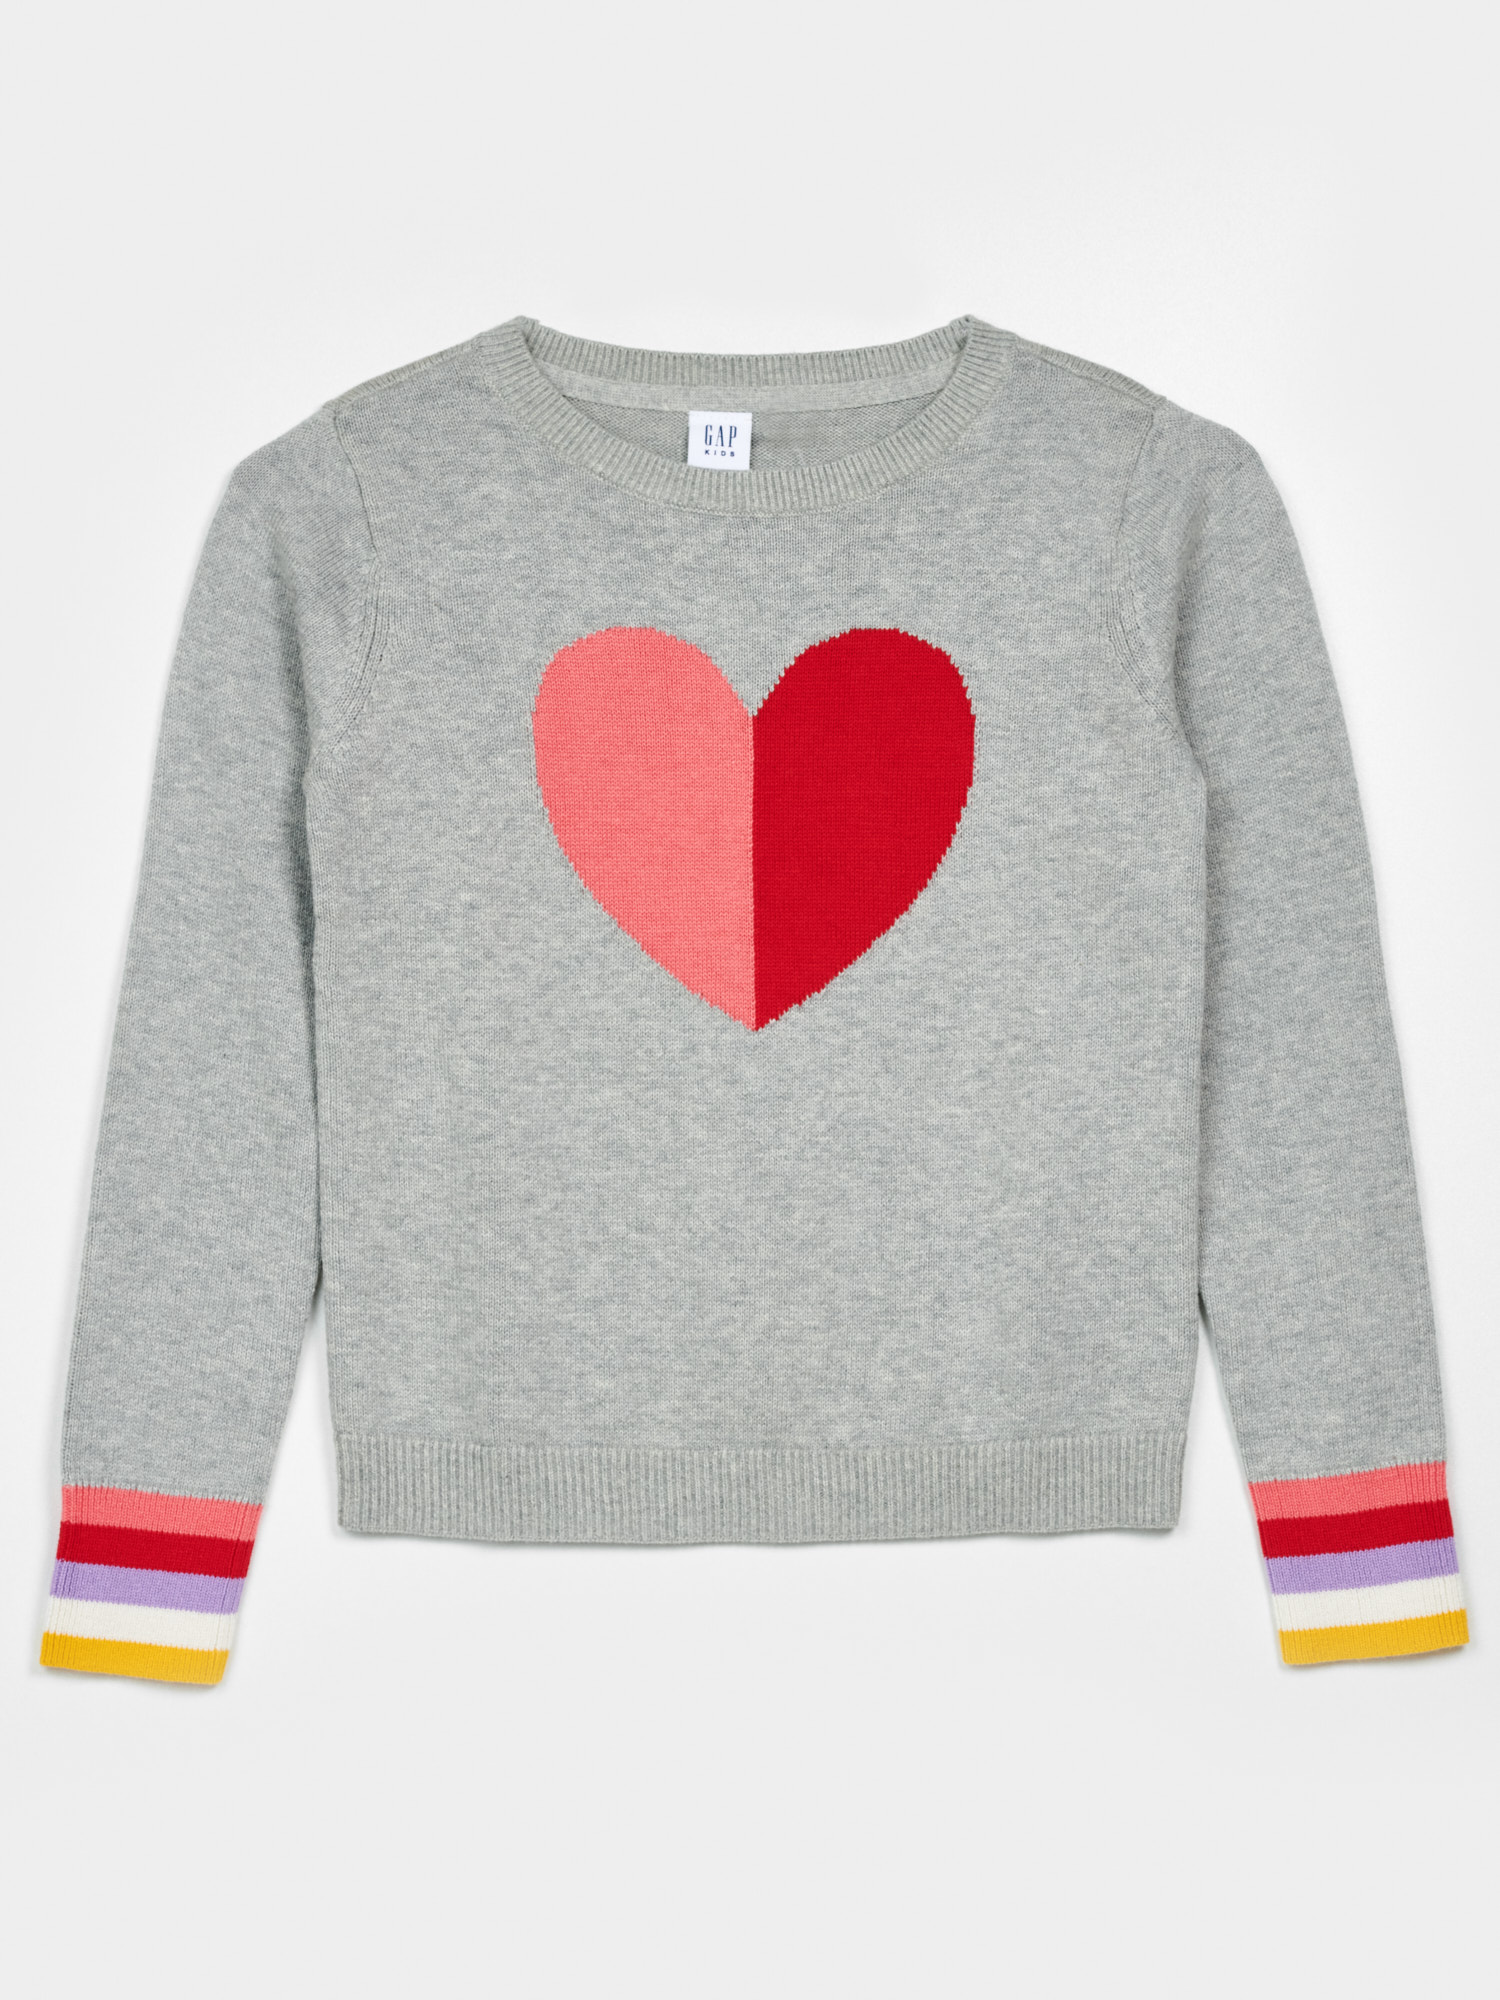 GAP Children's Heart Sweater - Girls